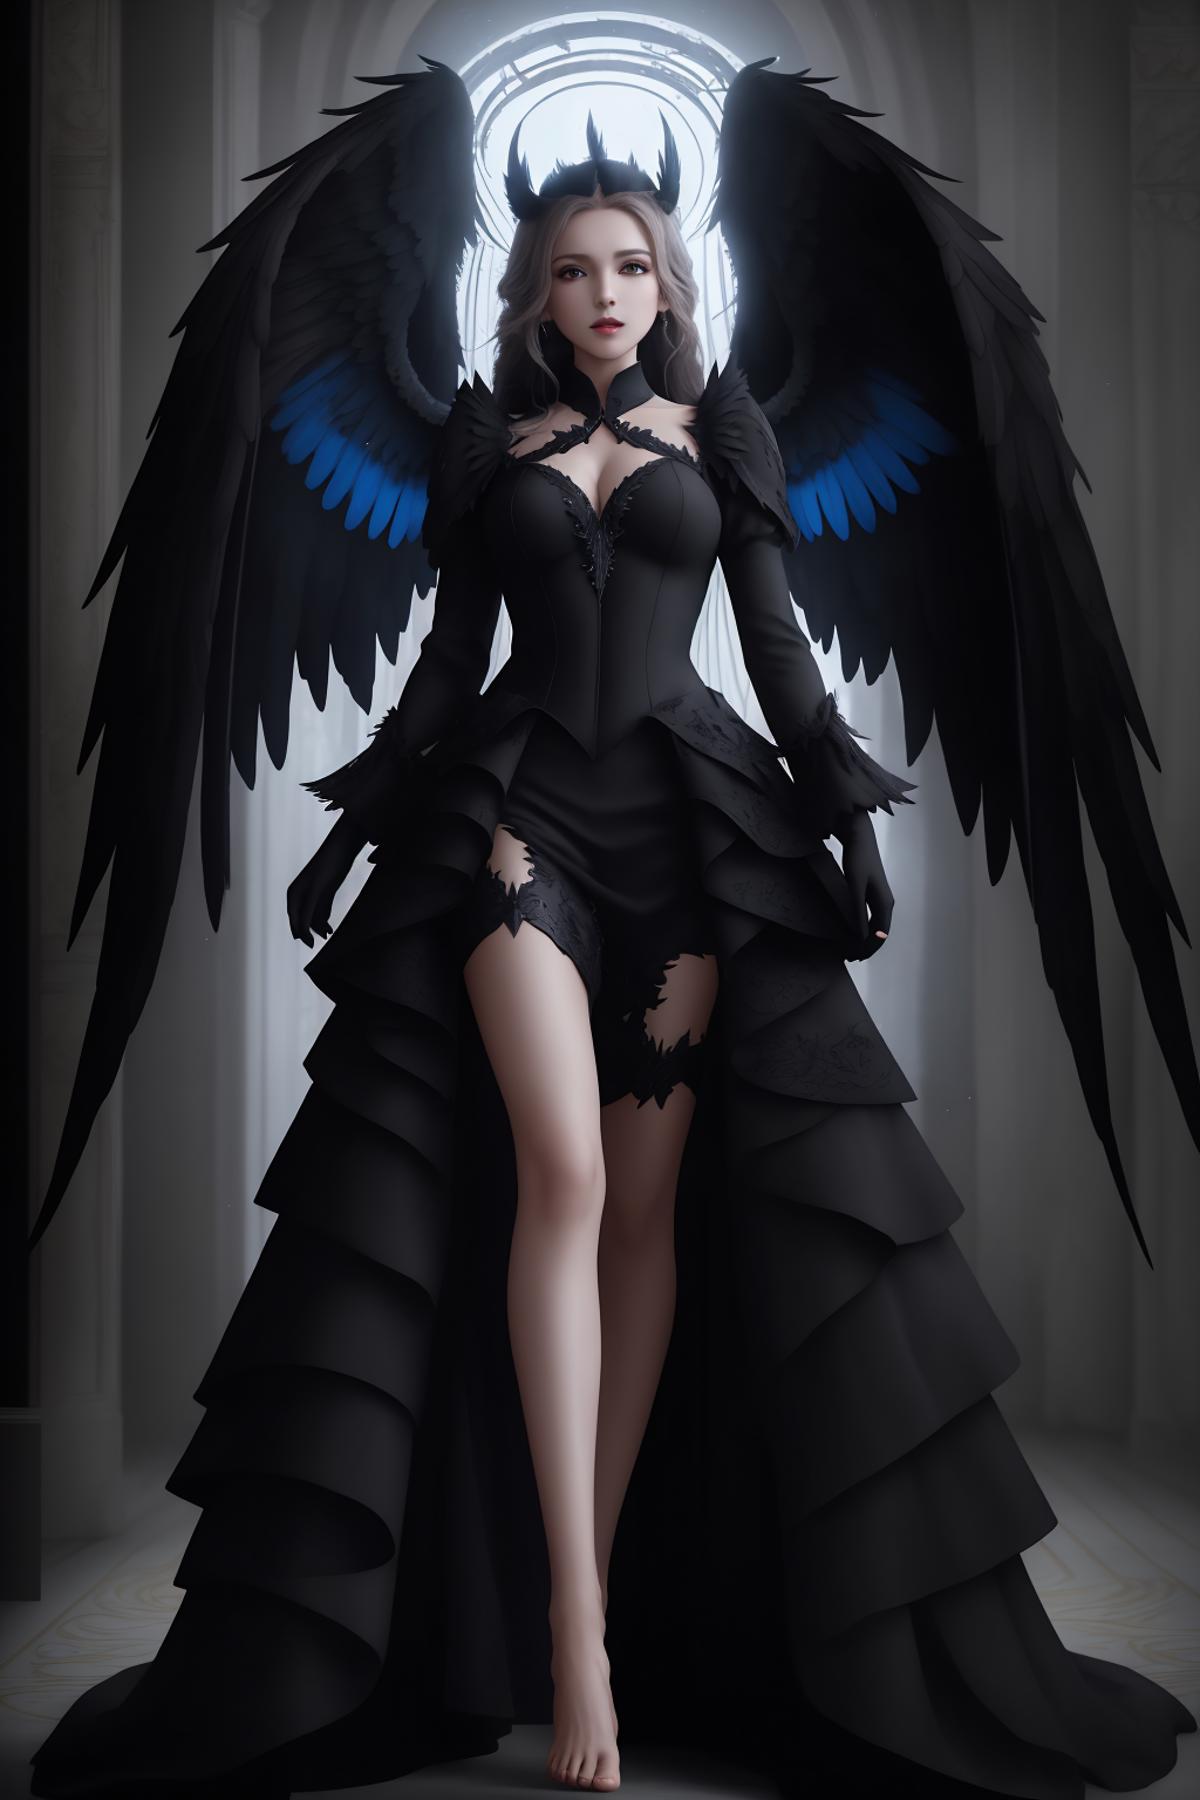 Dark Angel image by Kejolong